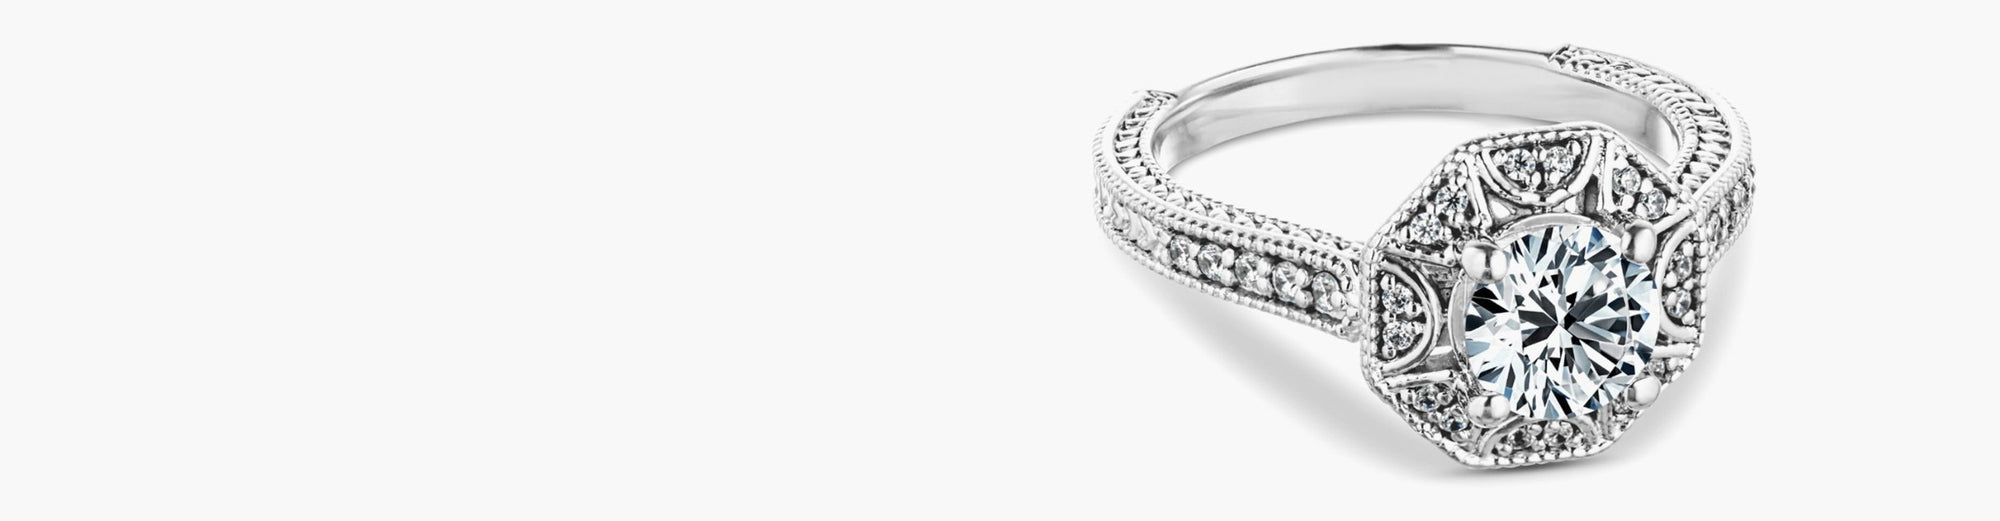 Filigree Detailed Engagement Rings